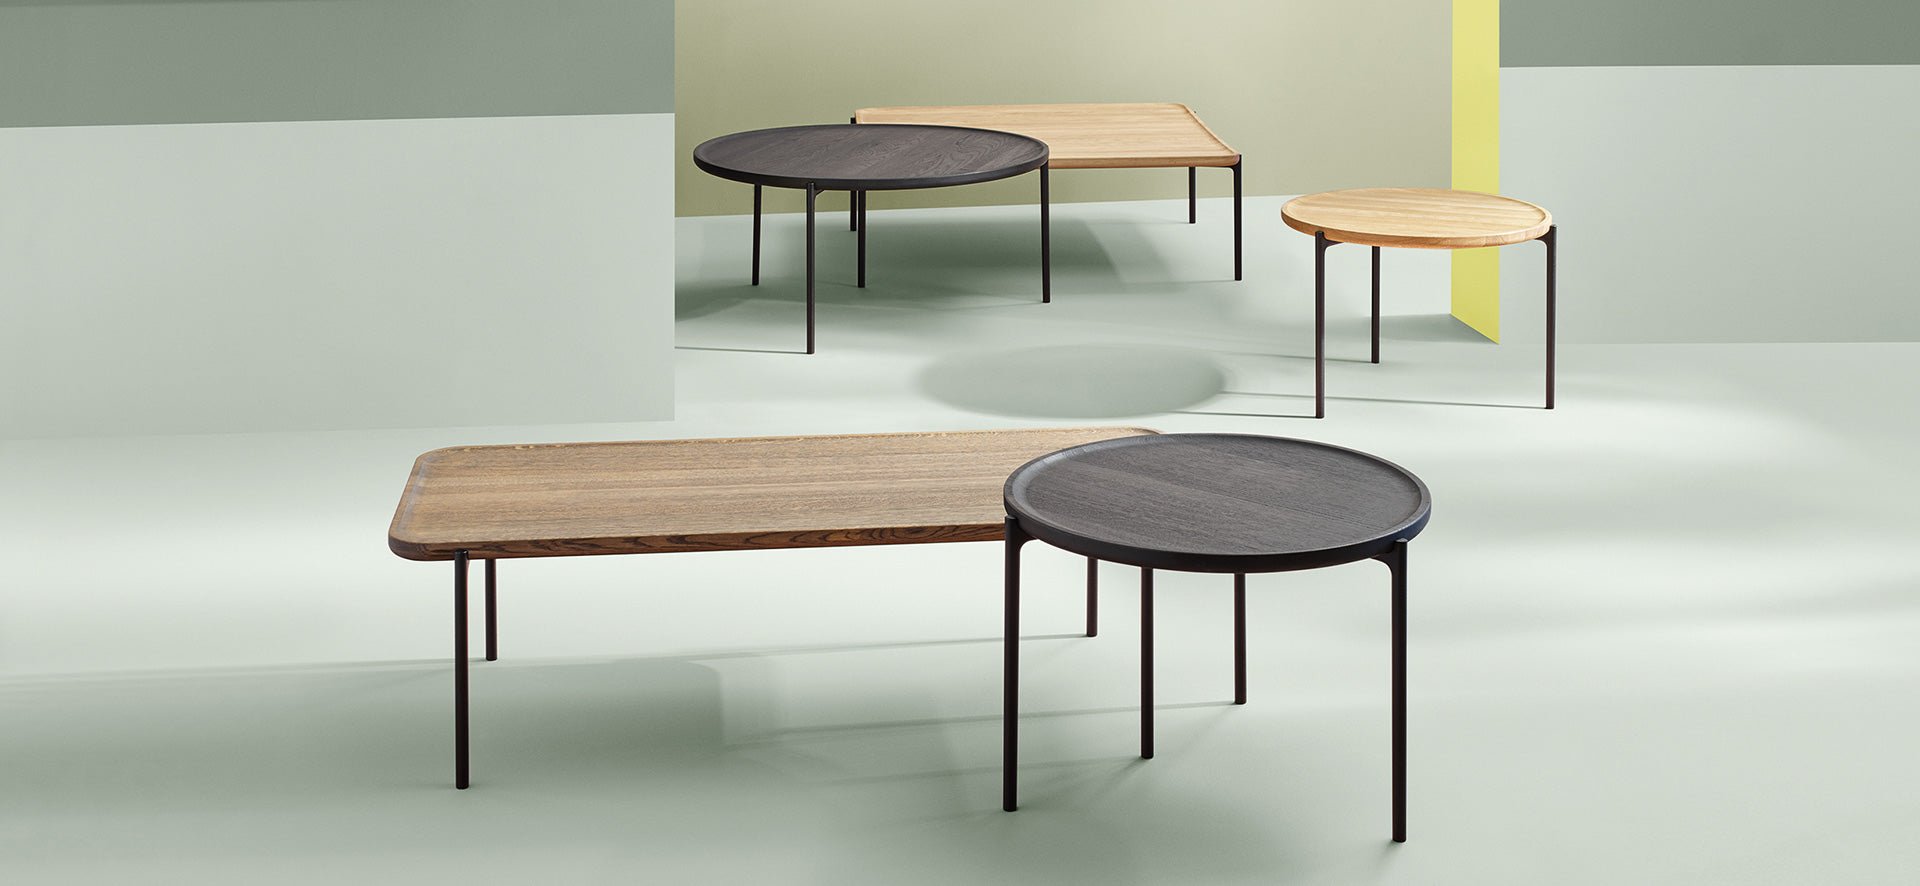 Eva Solo Savoye Lounge Coffee Table | Panik Design